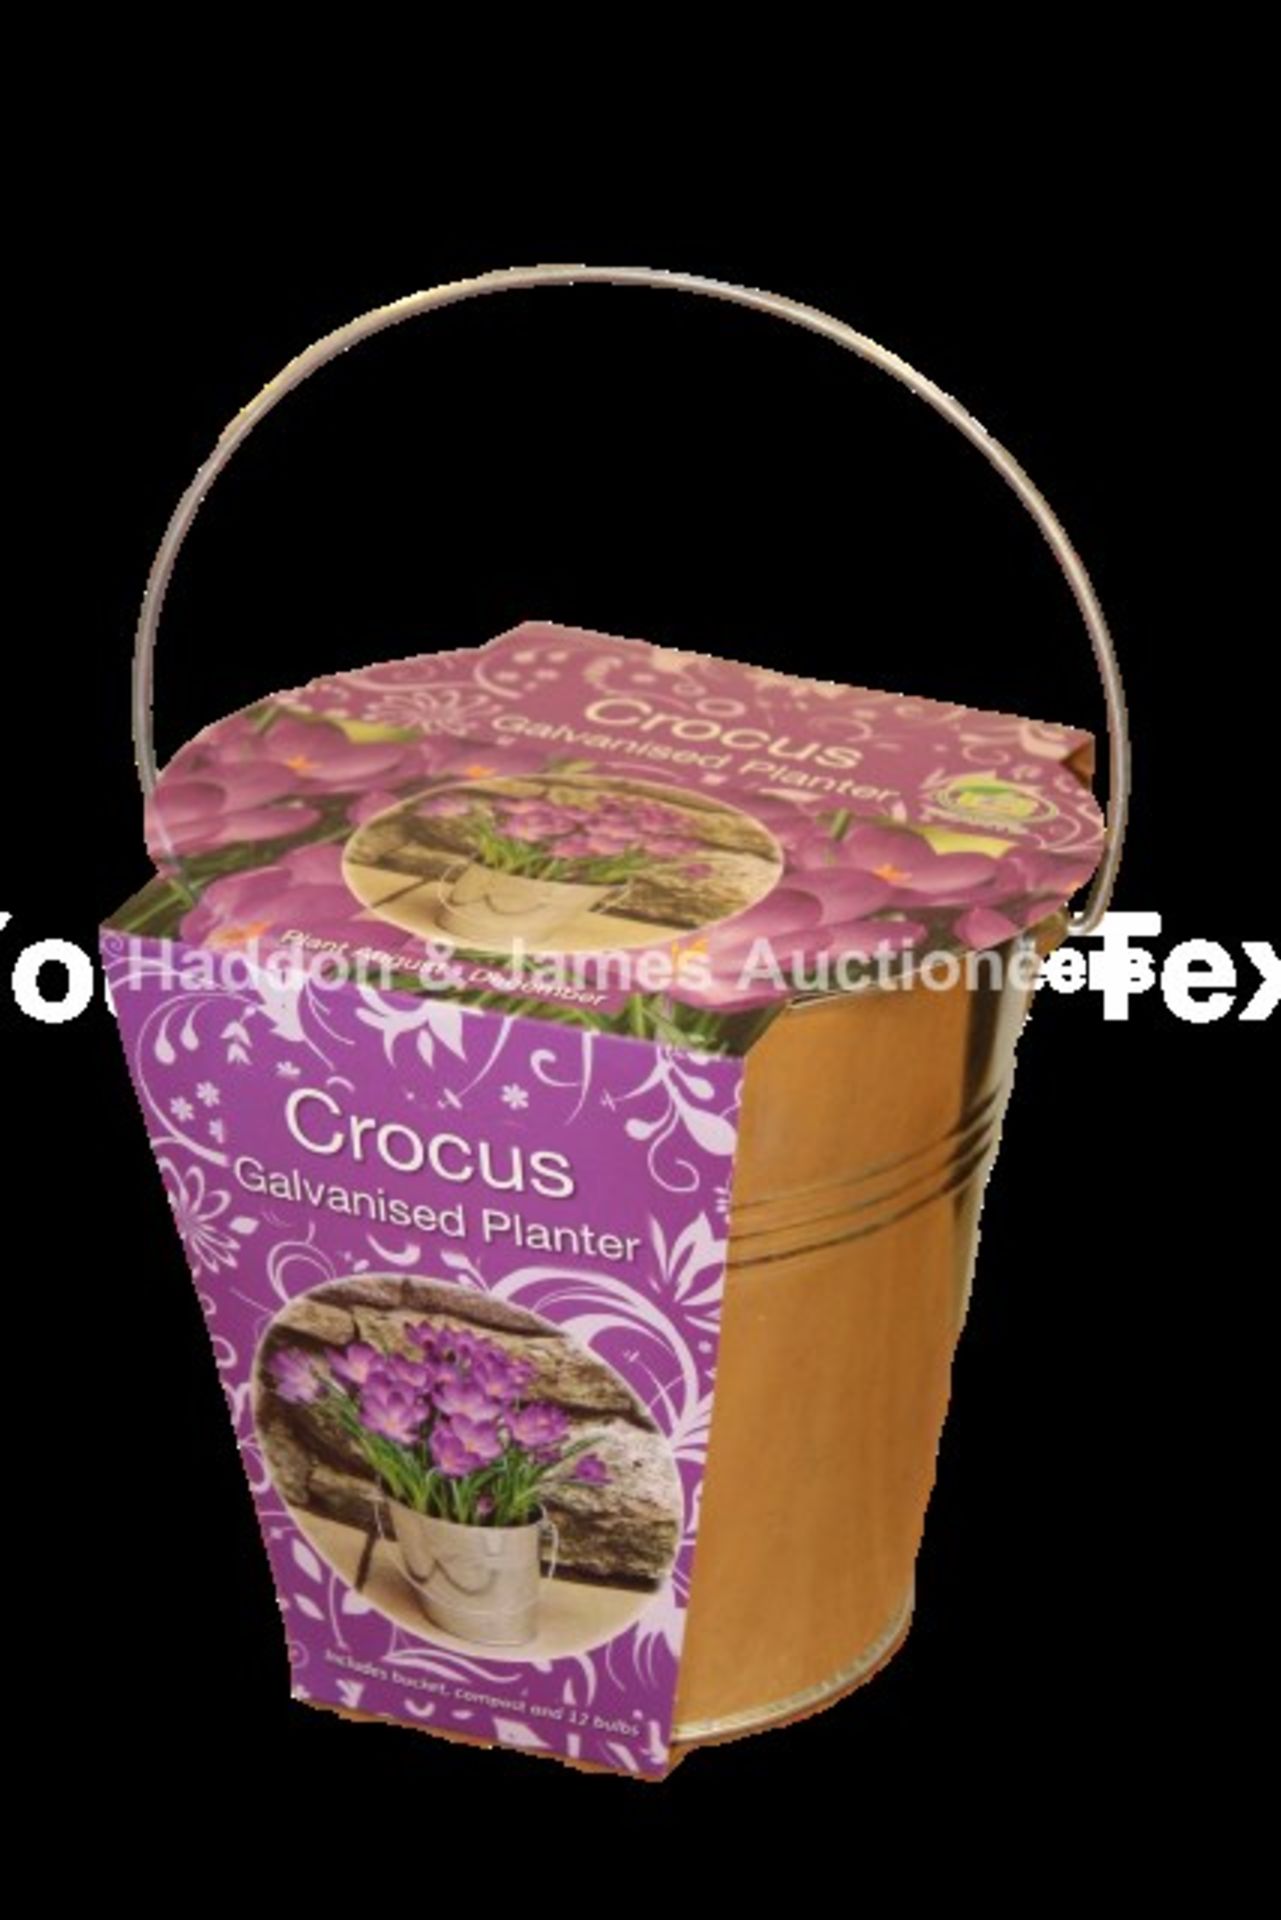 V Brand New Crocus 12 Bulb Galvanised Bucket Gift Set Includes 12 Bulbs, Bucket Planter And Compost